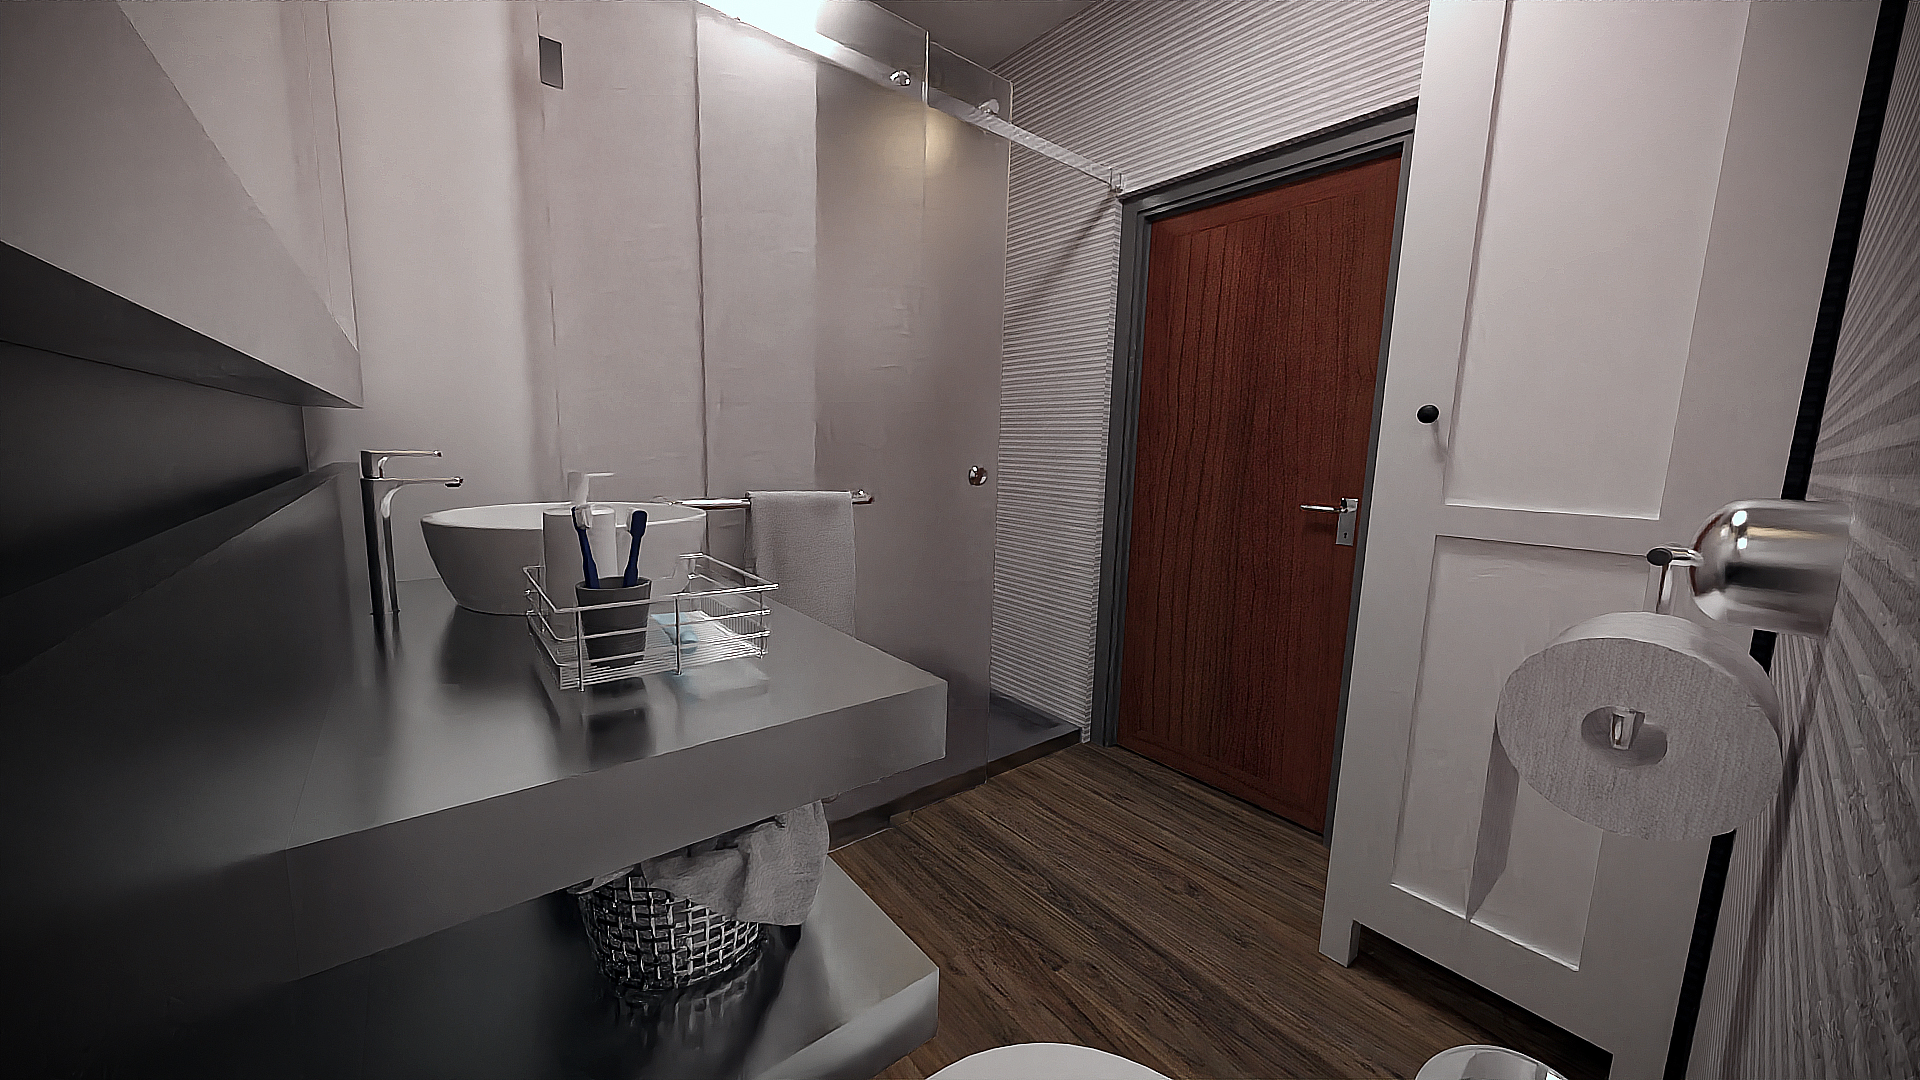 Boys Dorm Room by: Tesla3dCorp, 3D Models by Daz 3D